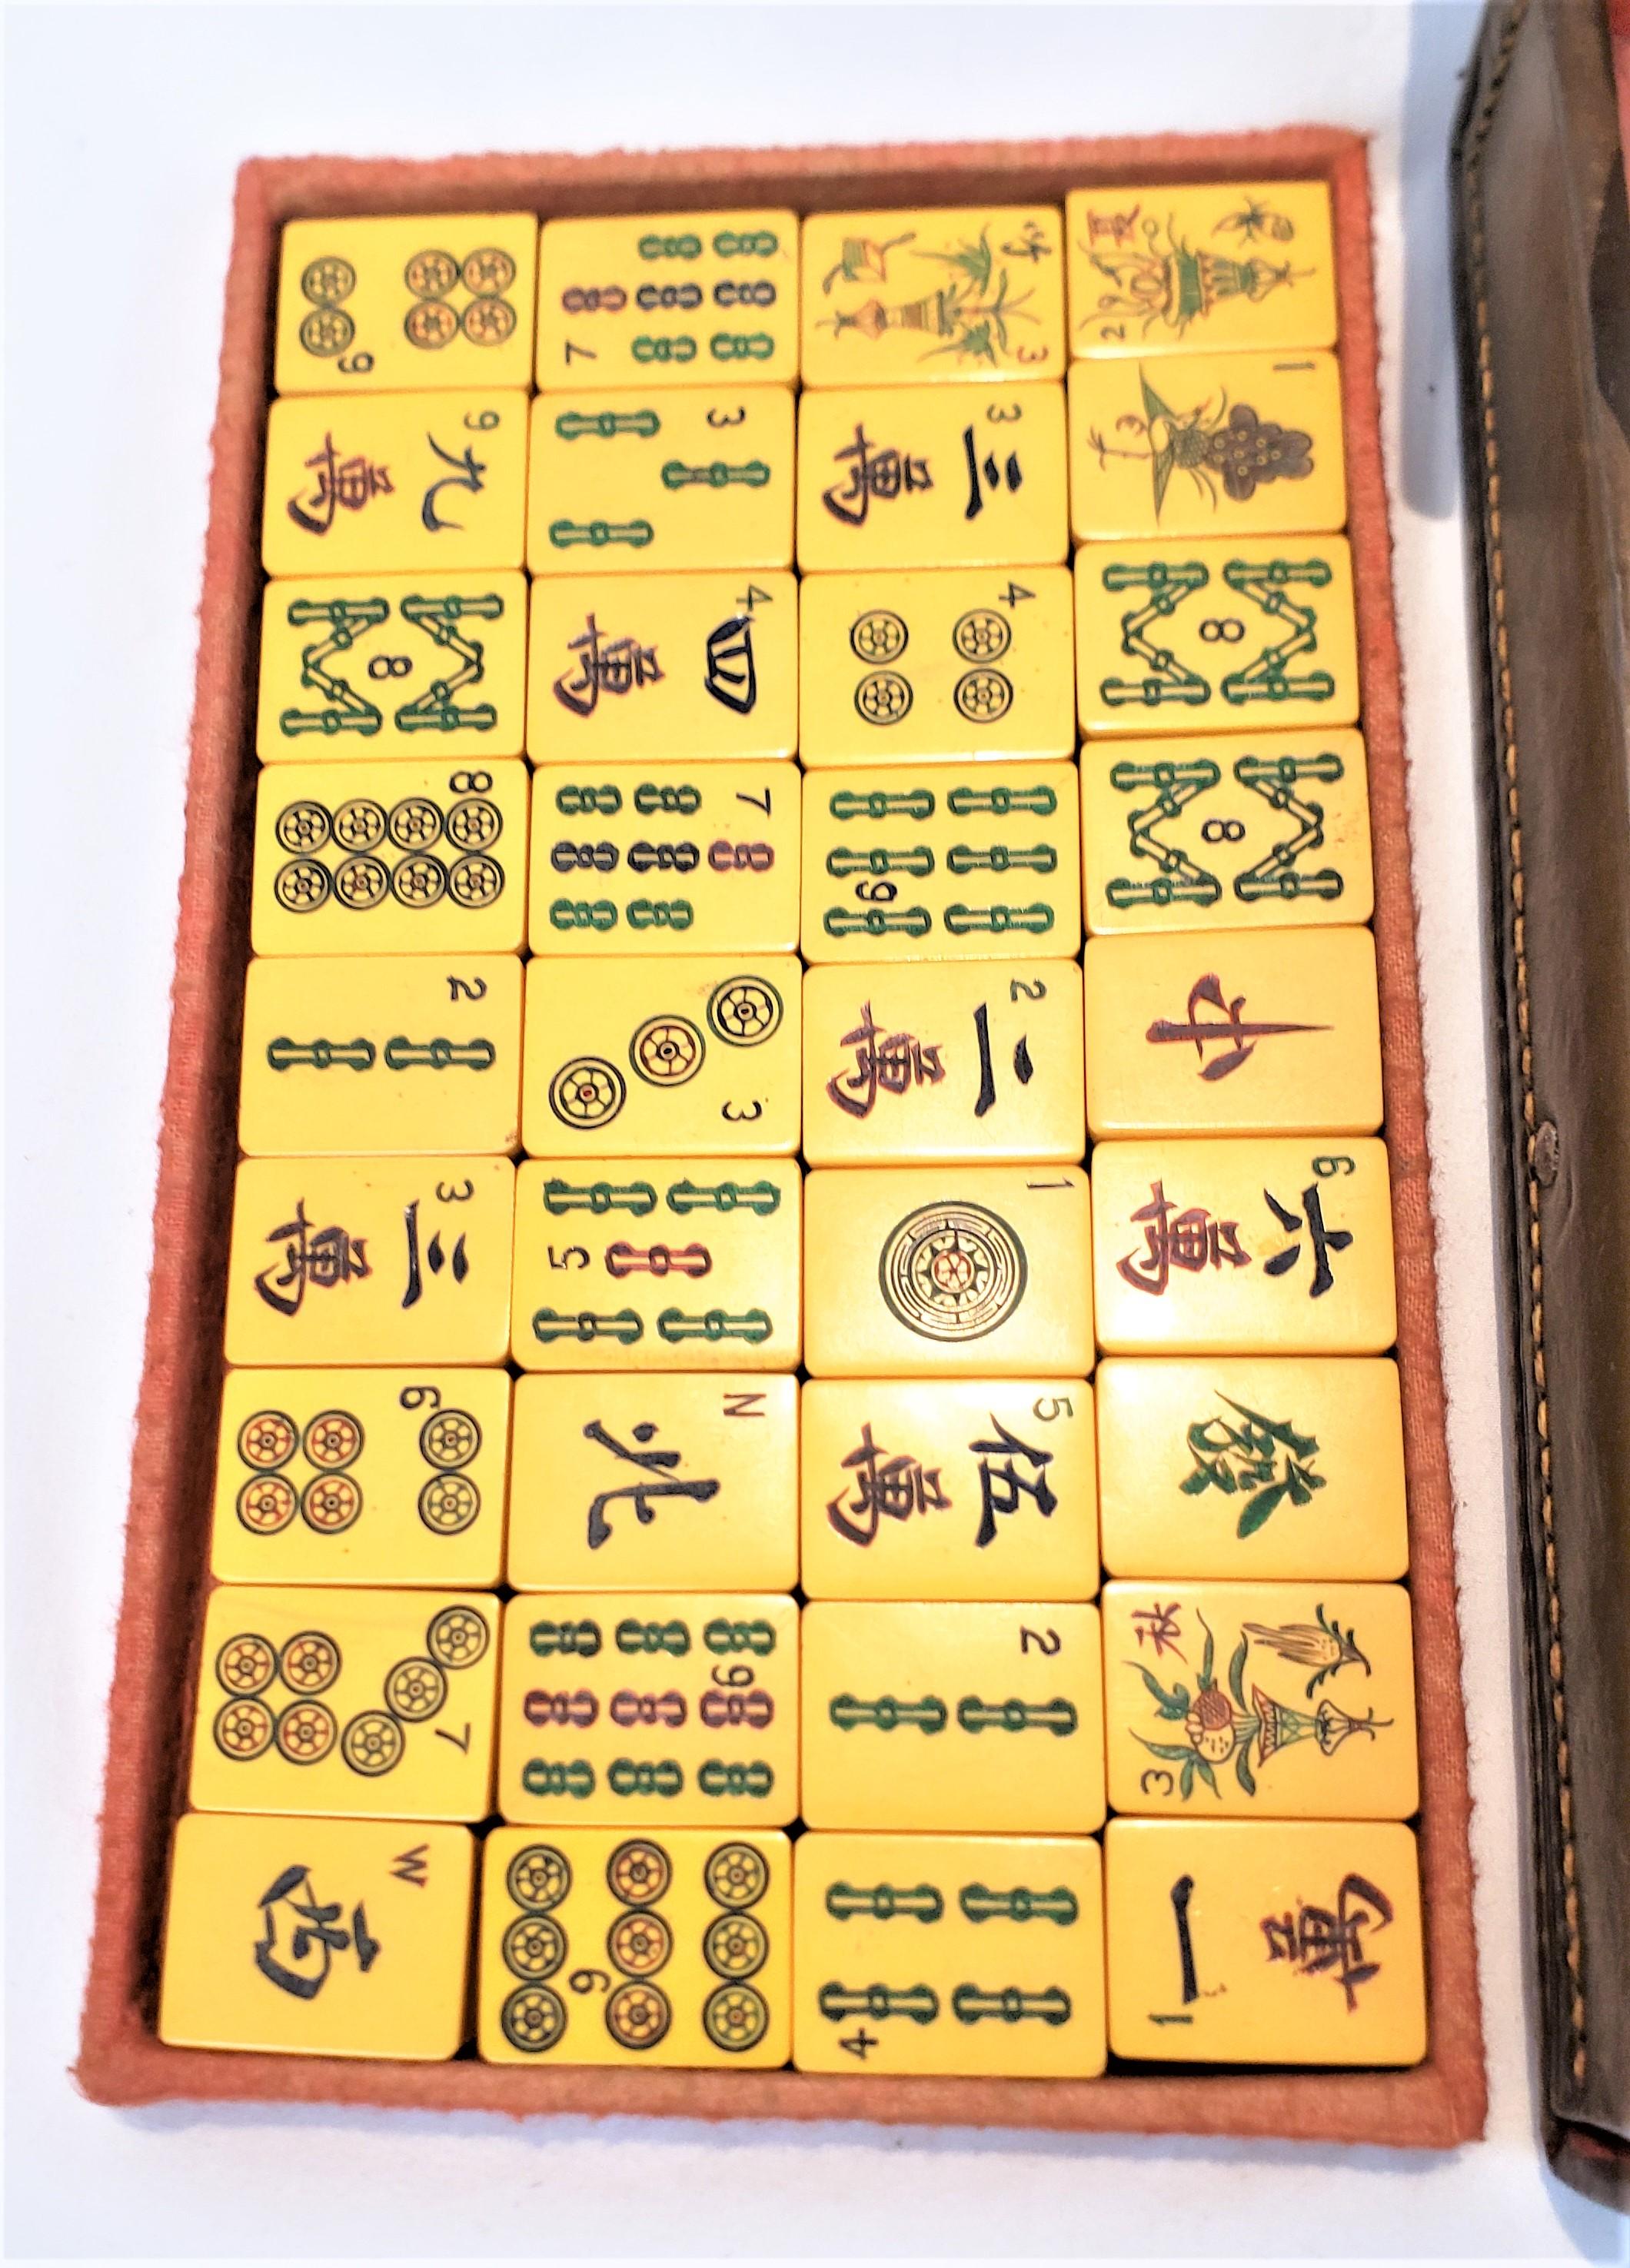 where did mahjong originate